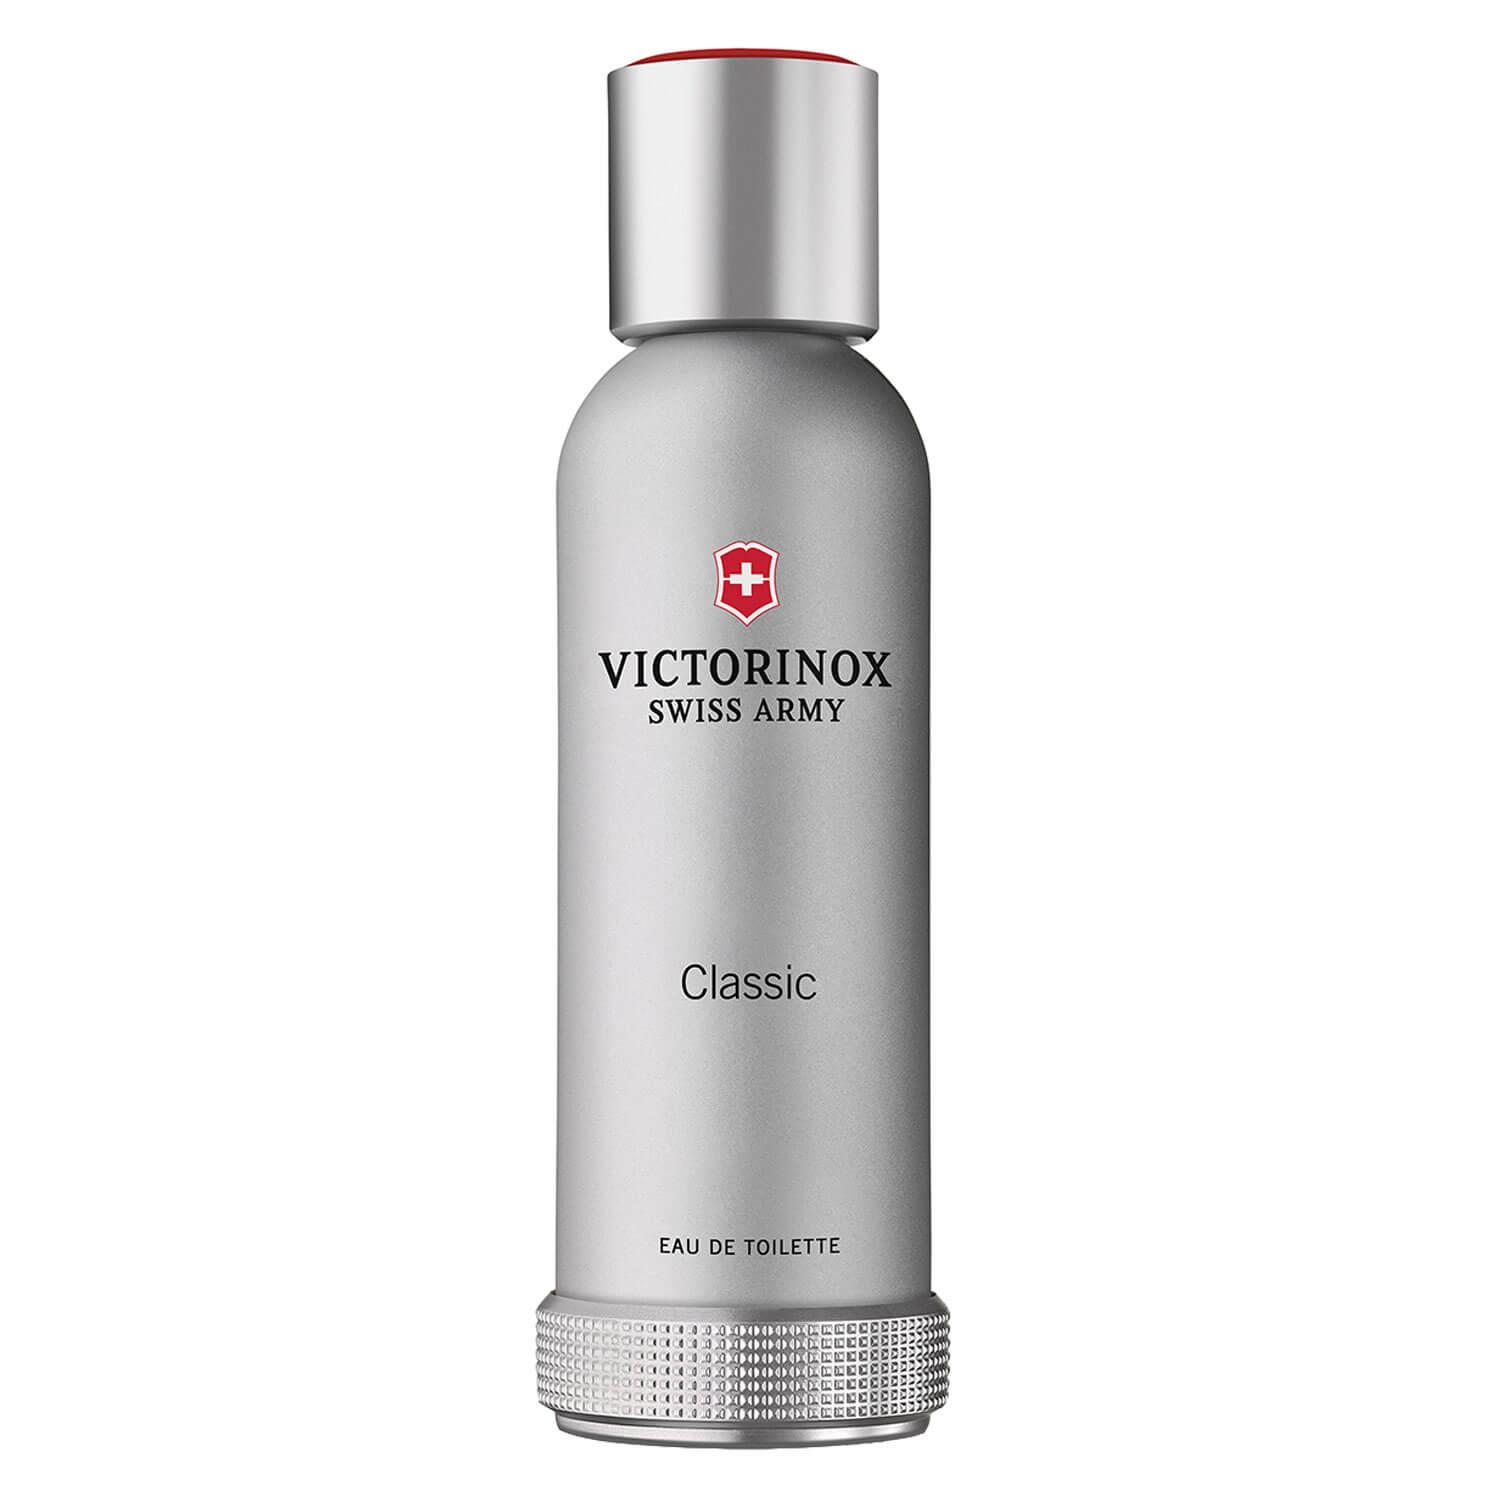 Victorinox Swiss Army - Classic Eau de Toilette